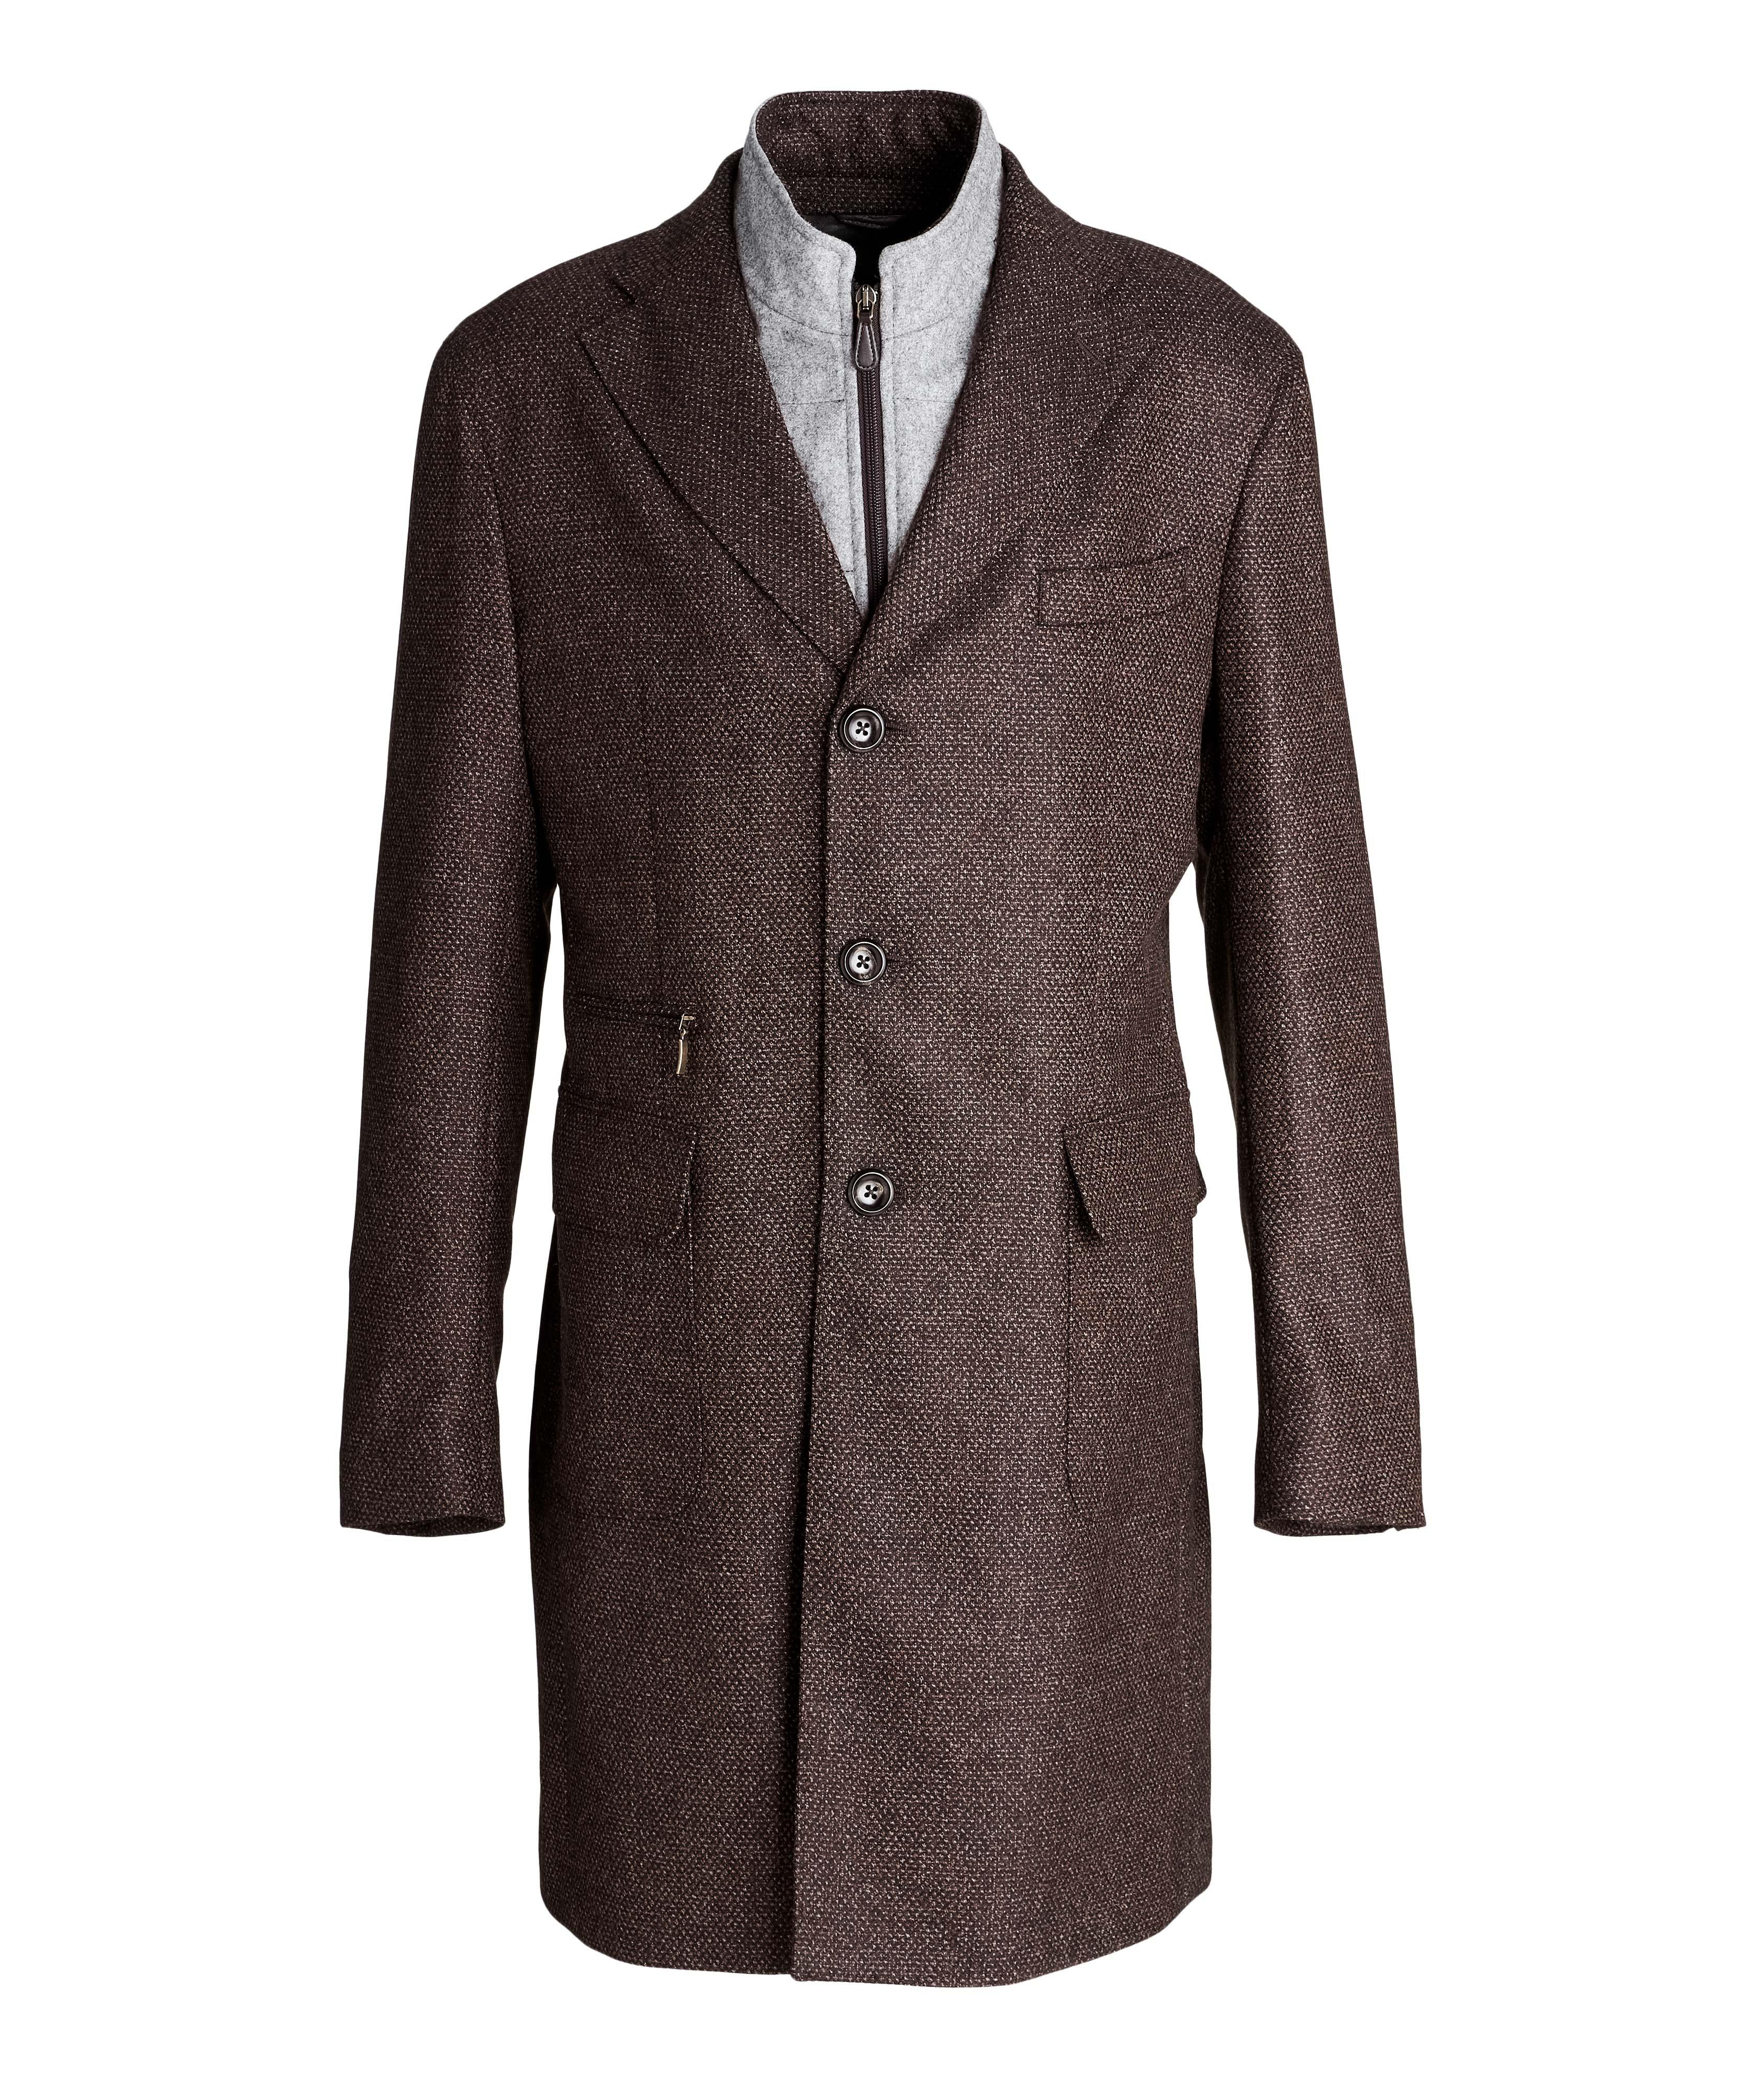 Harry Rosen Honeycomb Wool City Coat | Coats | Final Cut